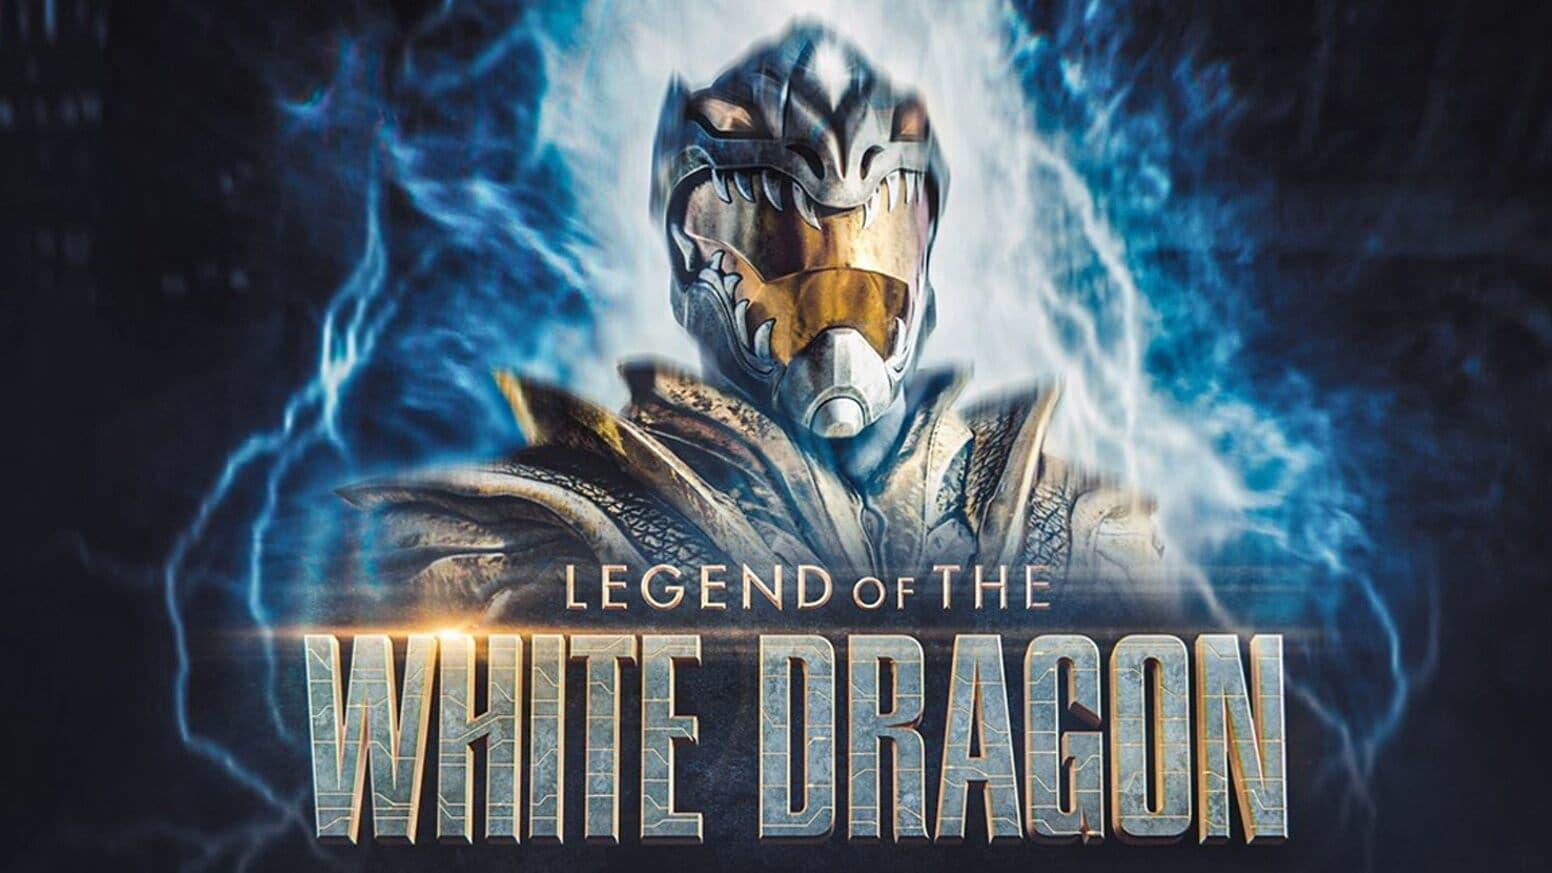 Legend of the White Dragon backdrop